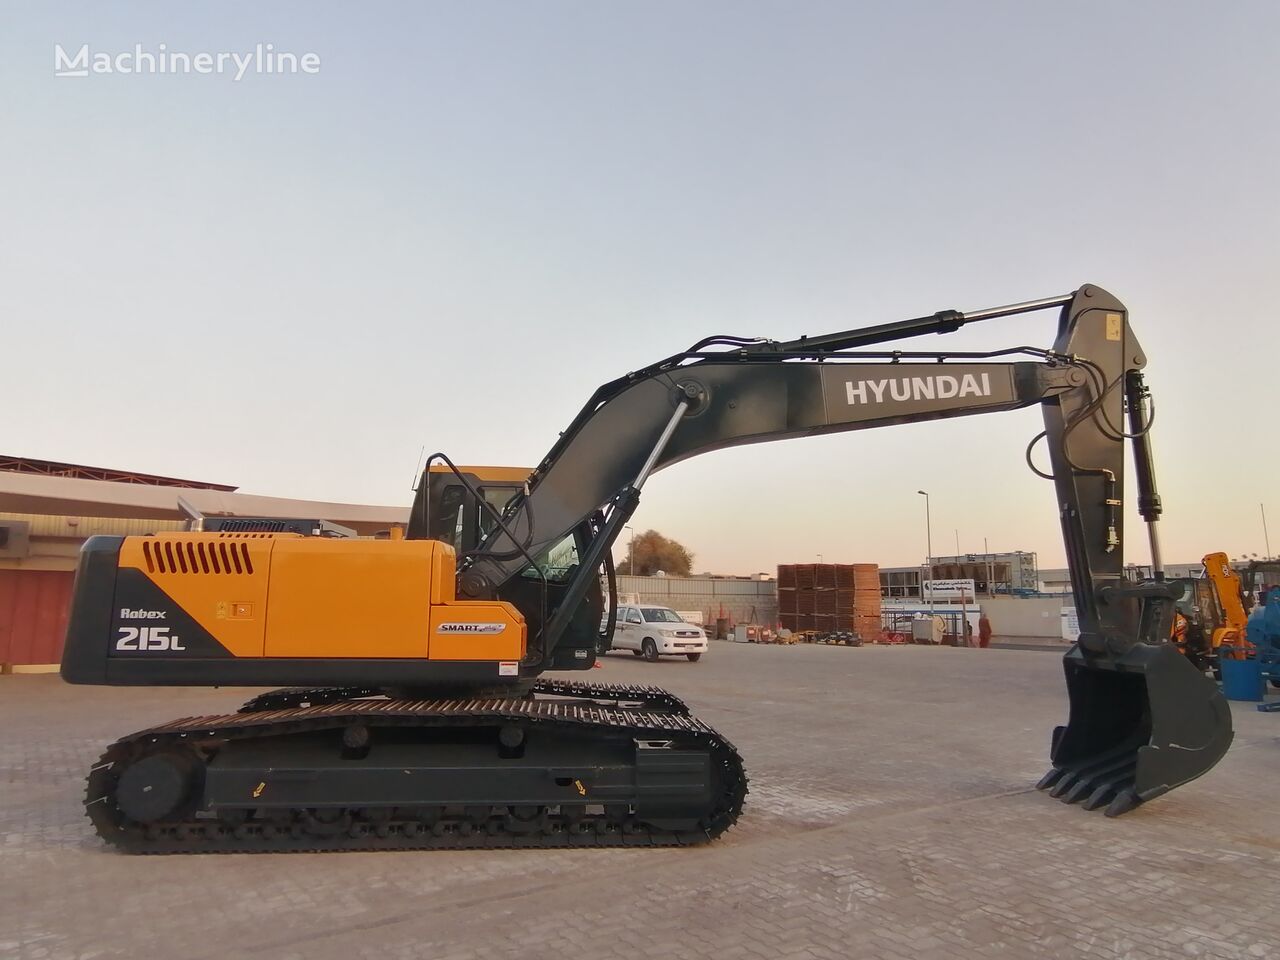 new Hyundai R215L tracked excavator